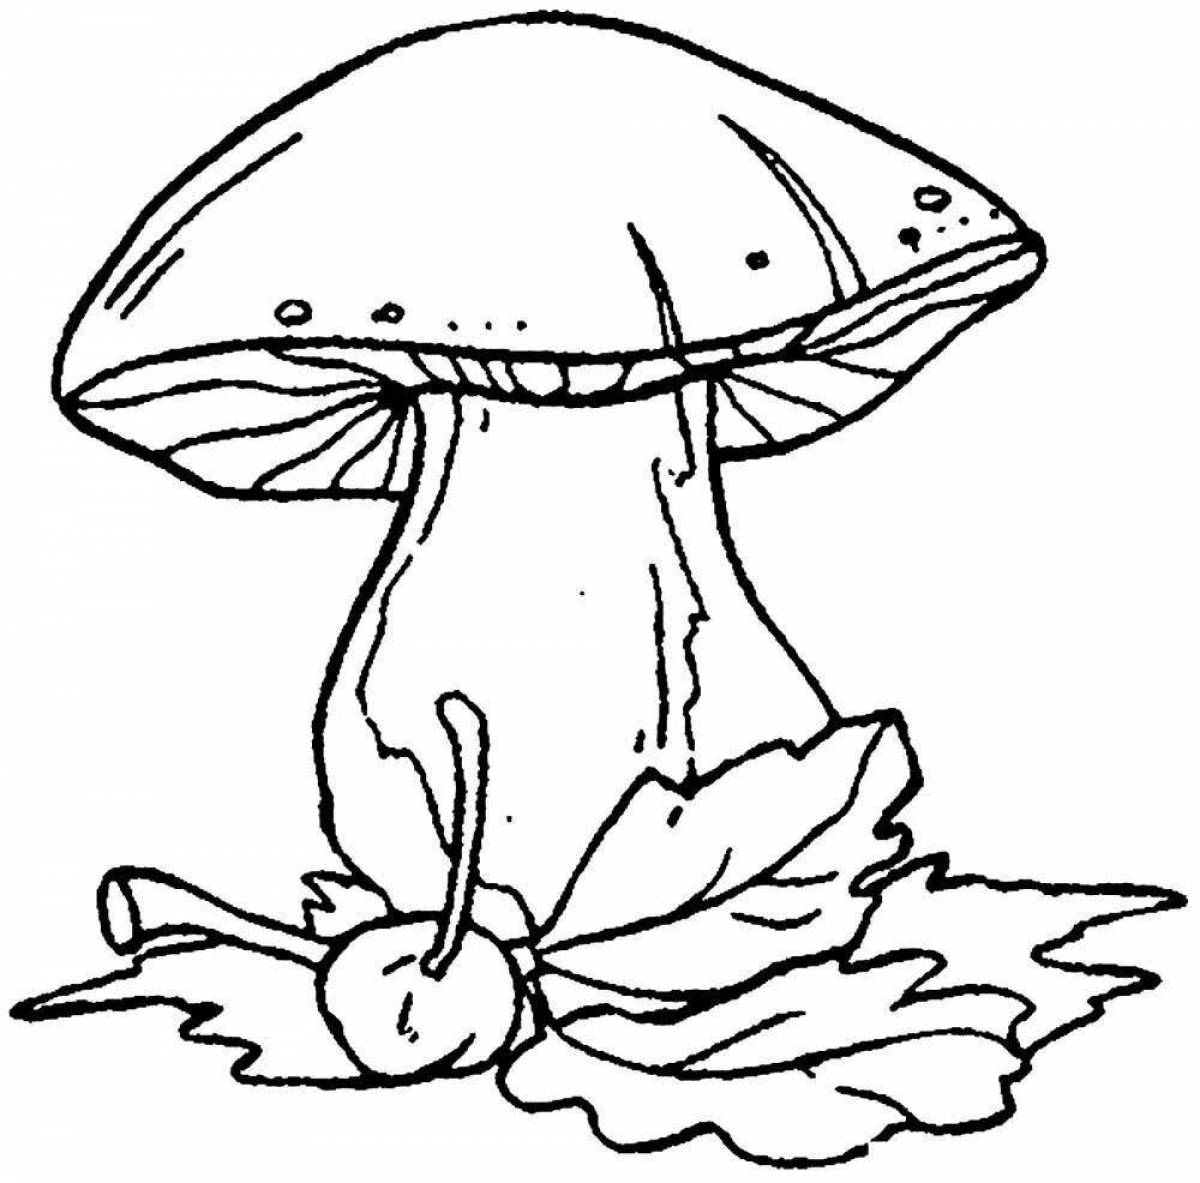 Glowing mushroom coloring page